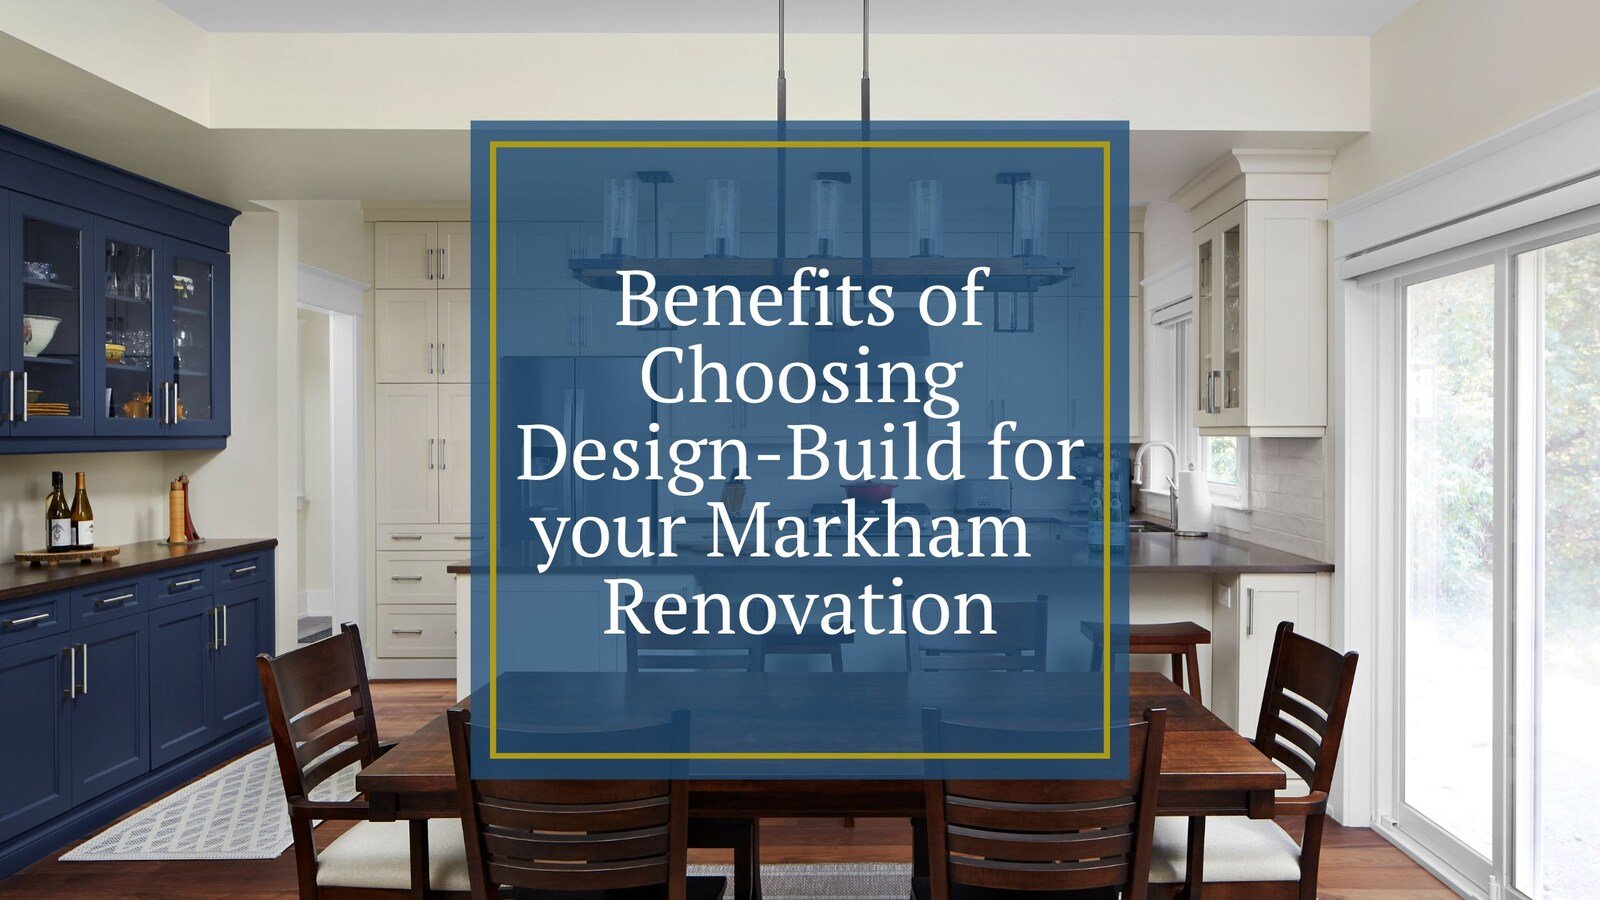 6 Benefits of Choosing Design-Build for your Markham Renovation